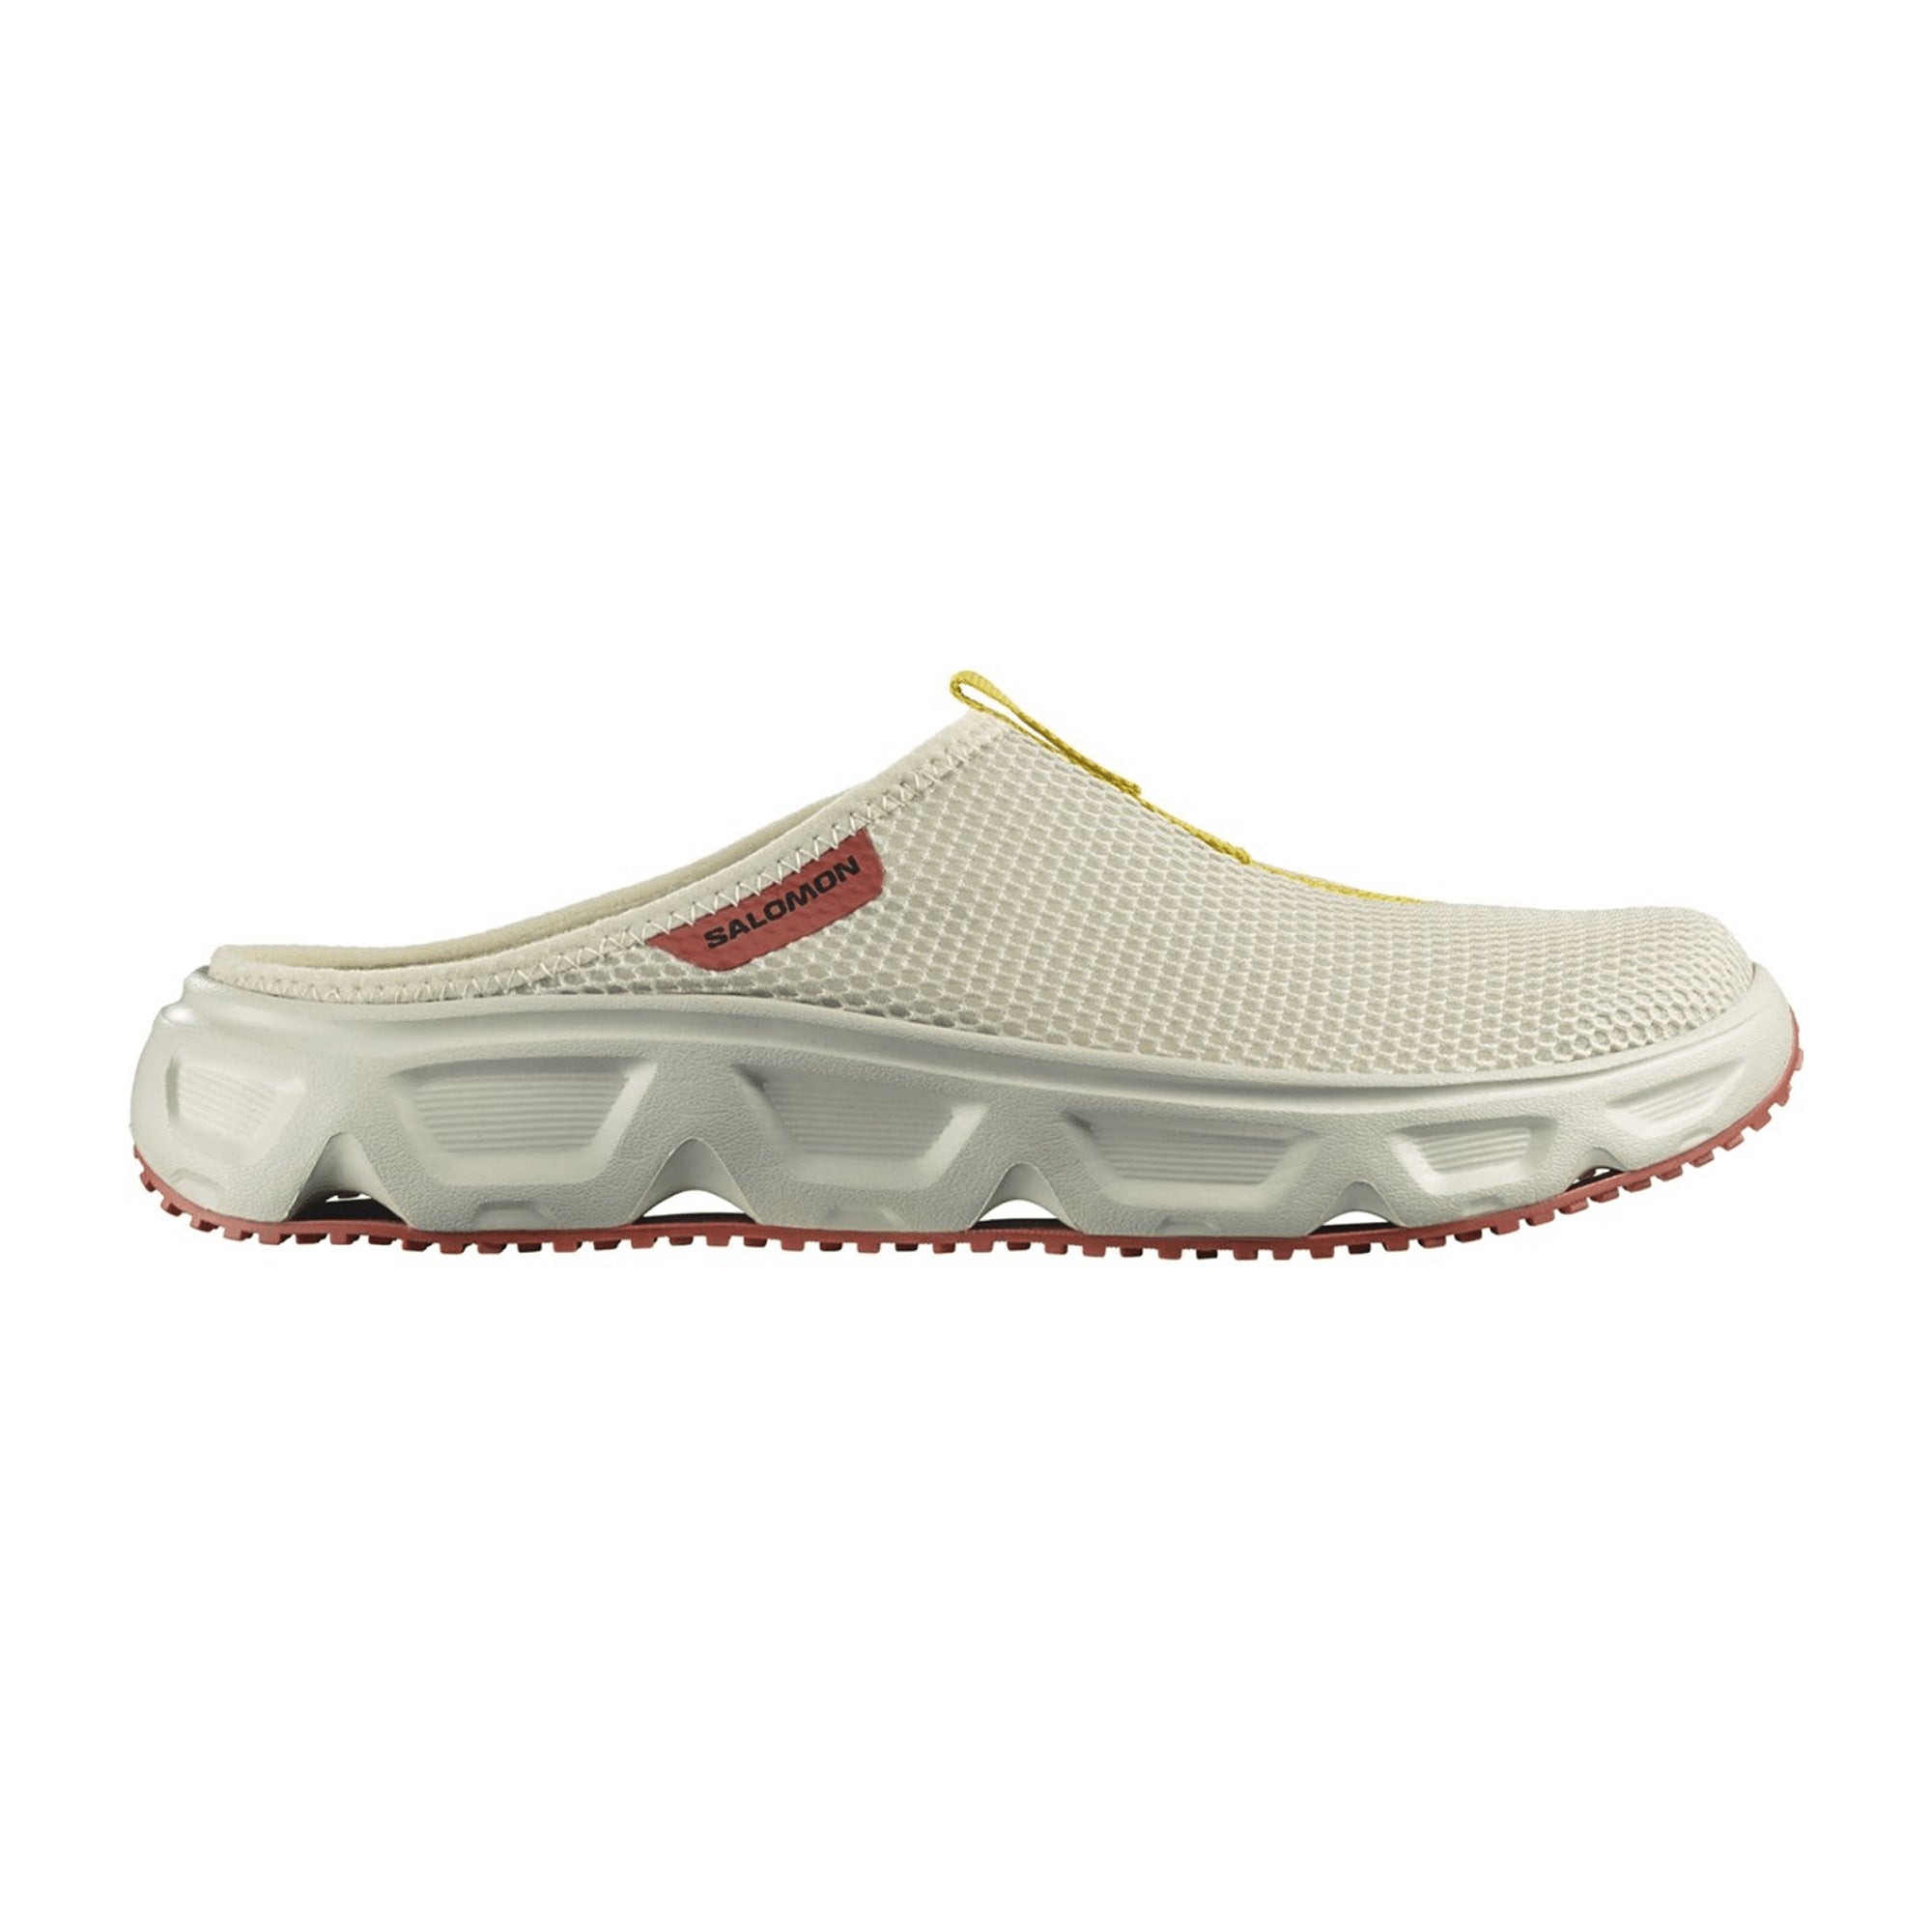 Salomon shoes REELAX SLIDE 6.0 Clematis Bl for men, gray